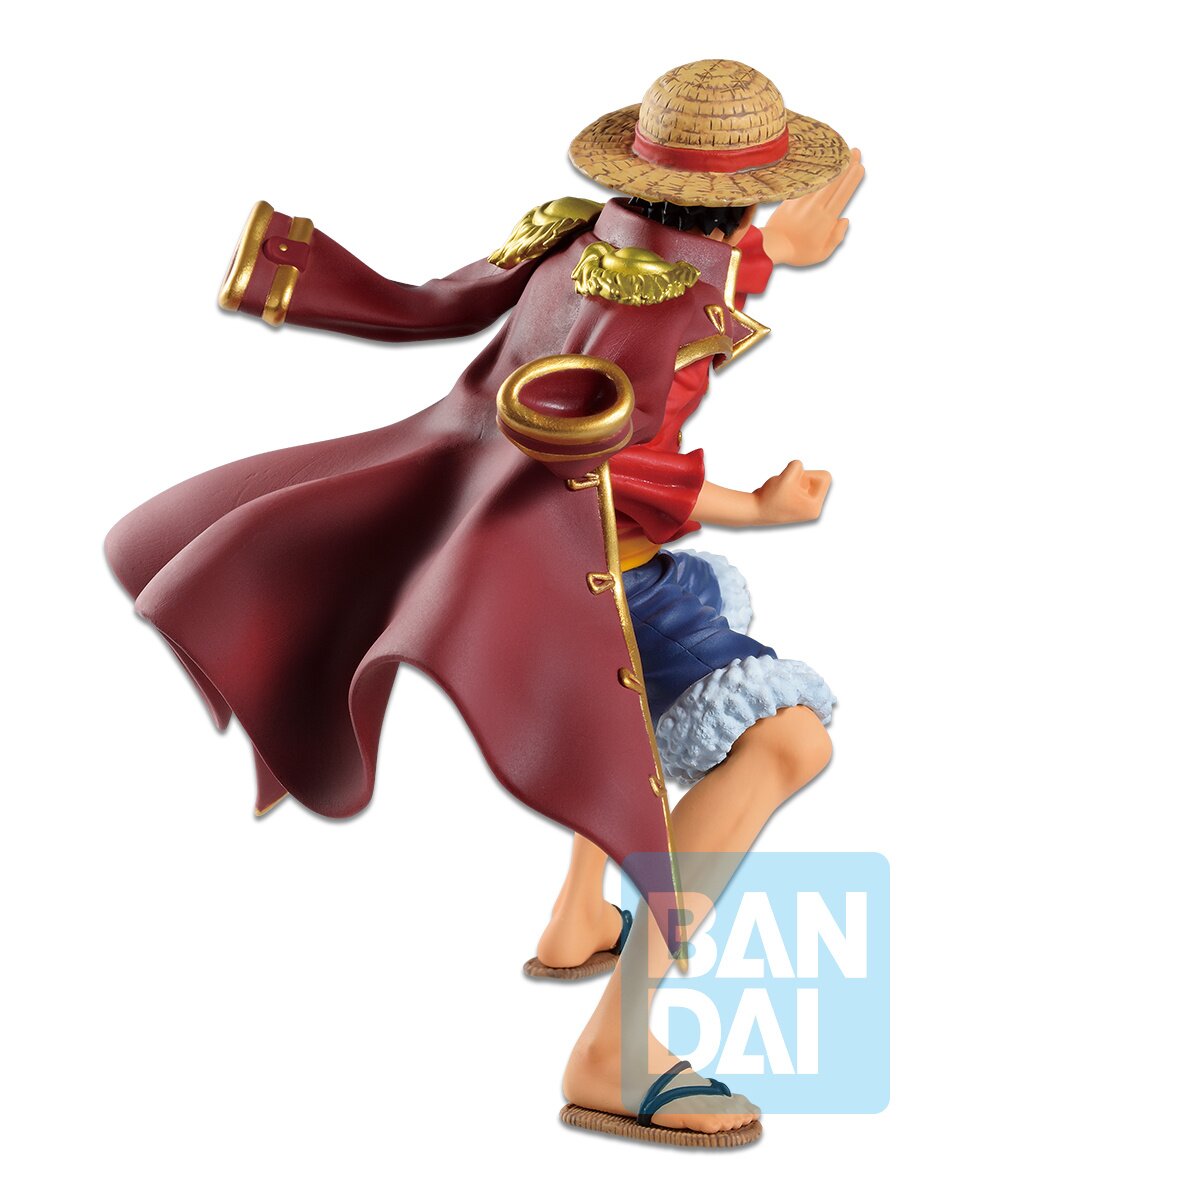 One Piece - Monkey D. Luffy - Ichiban Kuji OP ~The Legend of Gol D